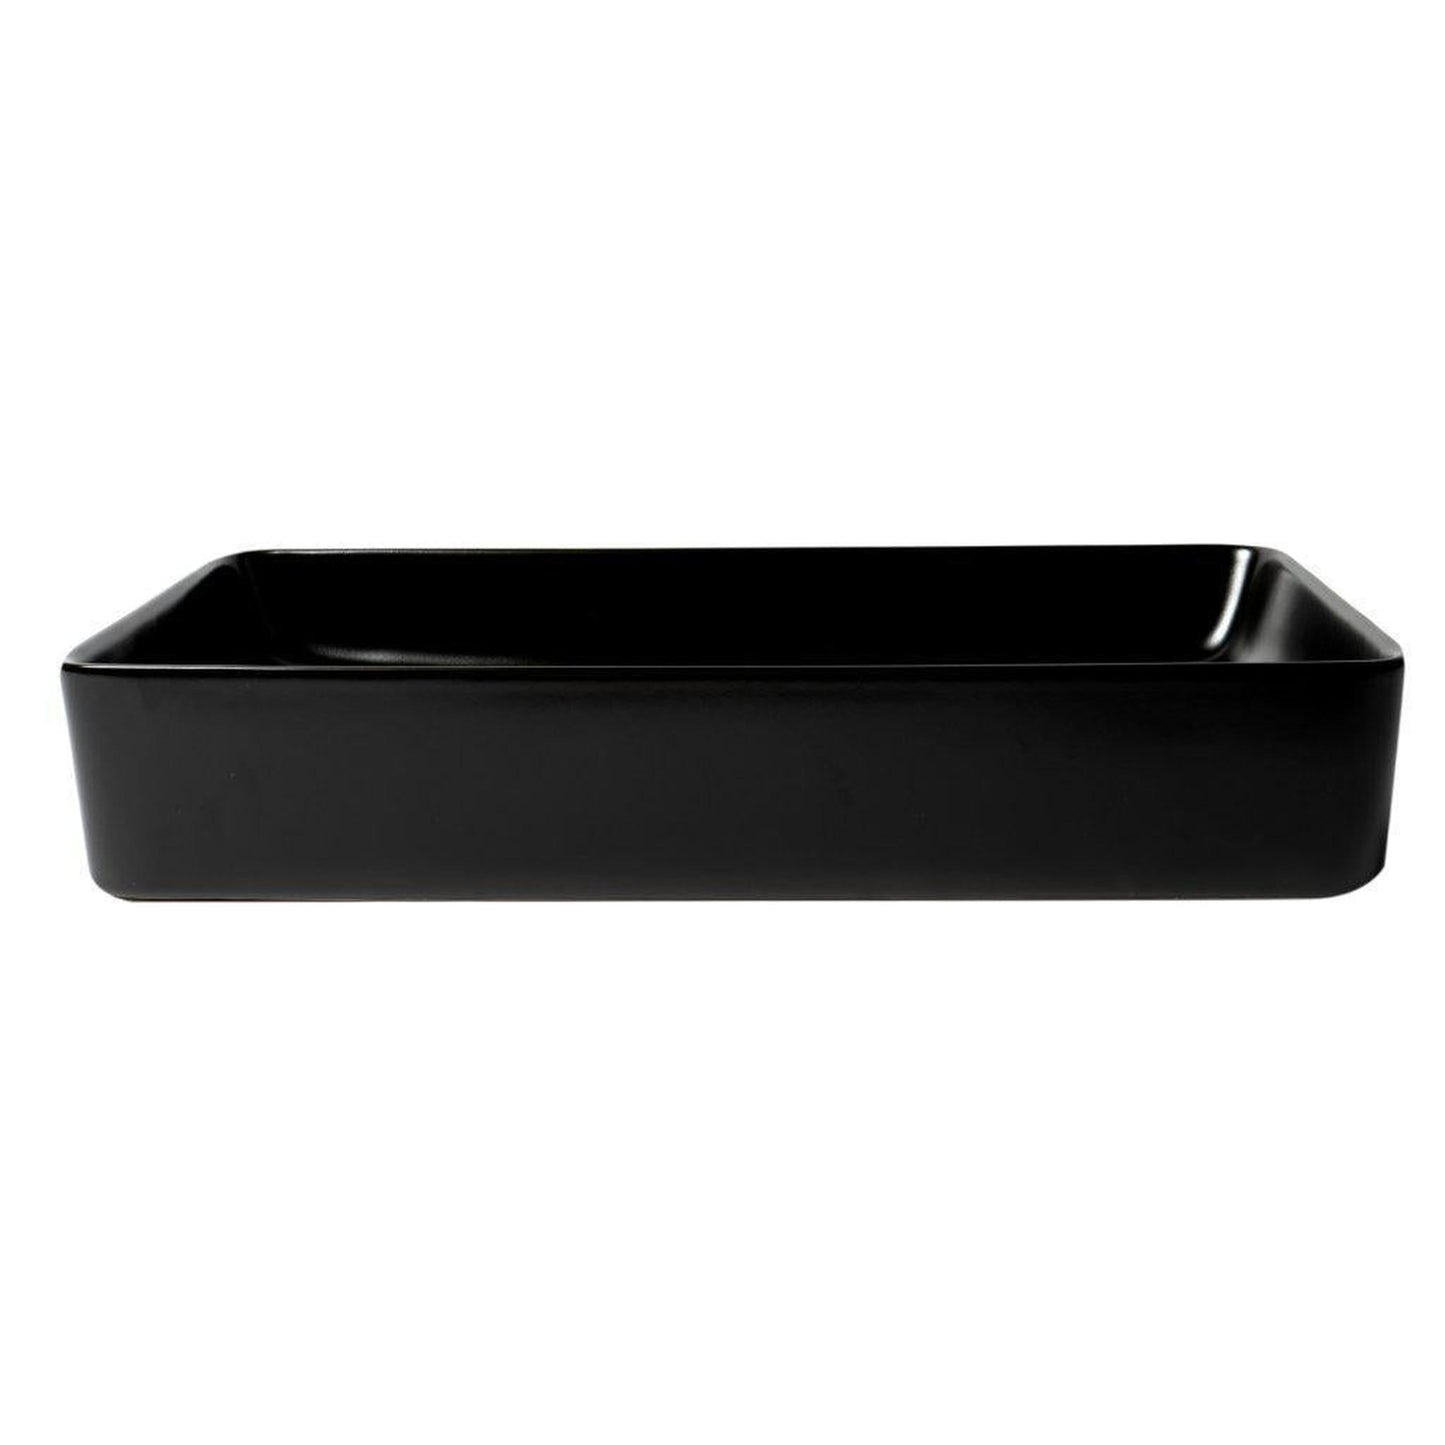 ALFI Brand ABC902-BM 24" Black Matte Above Mount Rectangle Ceramic Bathroom Sink With Overflow